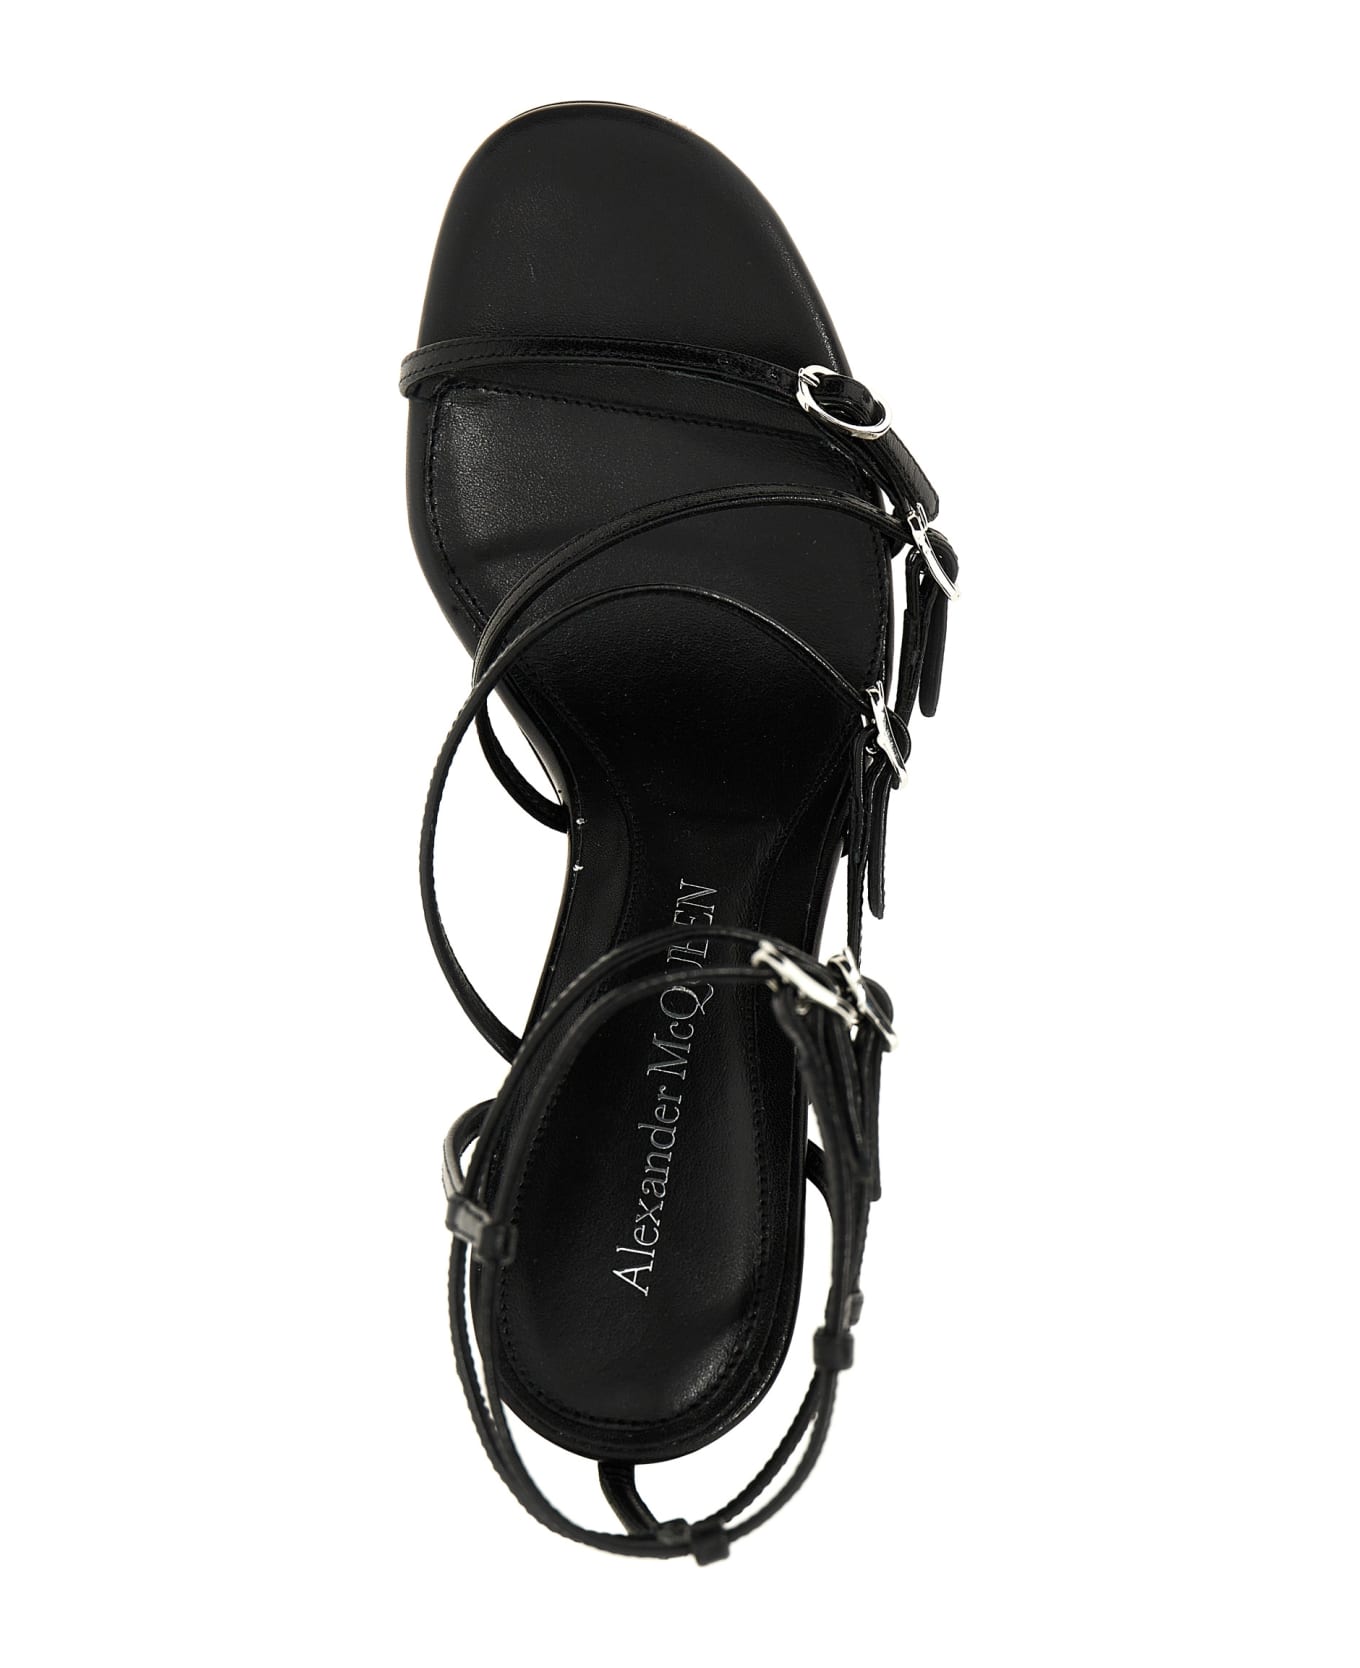 Alexander McQueen Strap Leather Sandals - Black サンダル